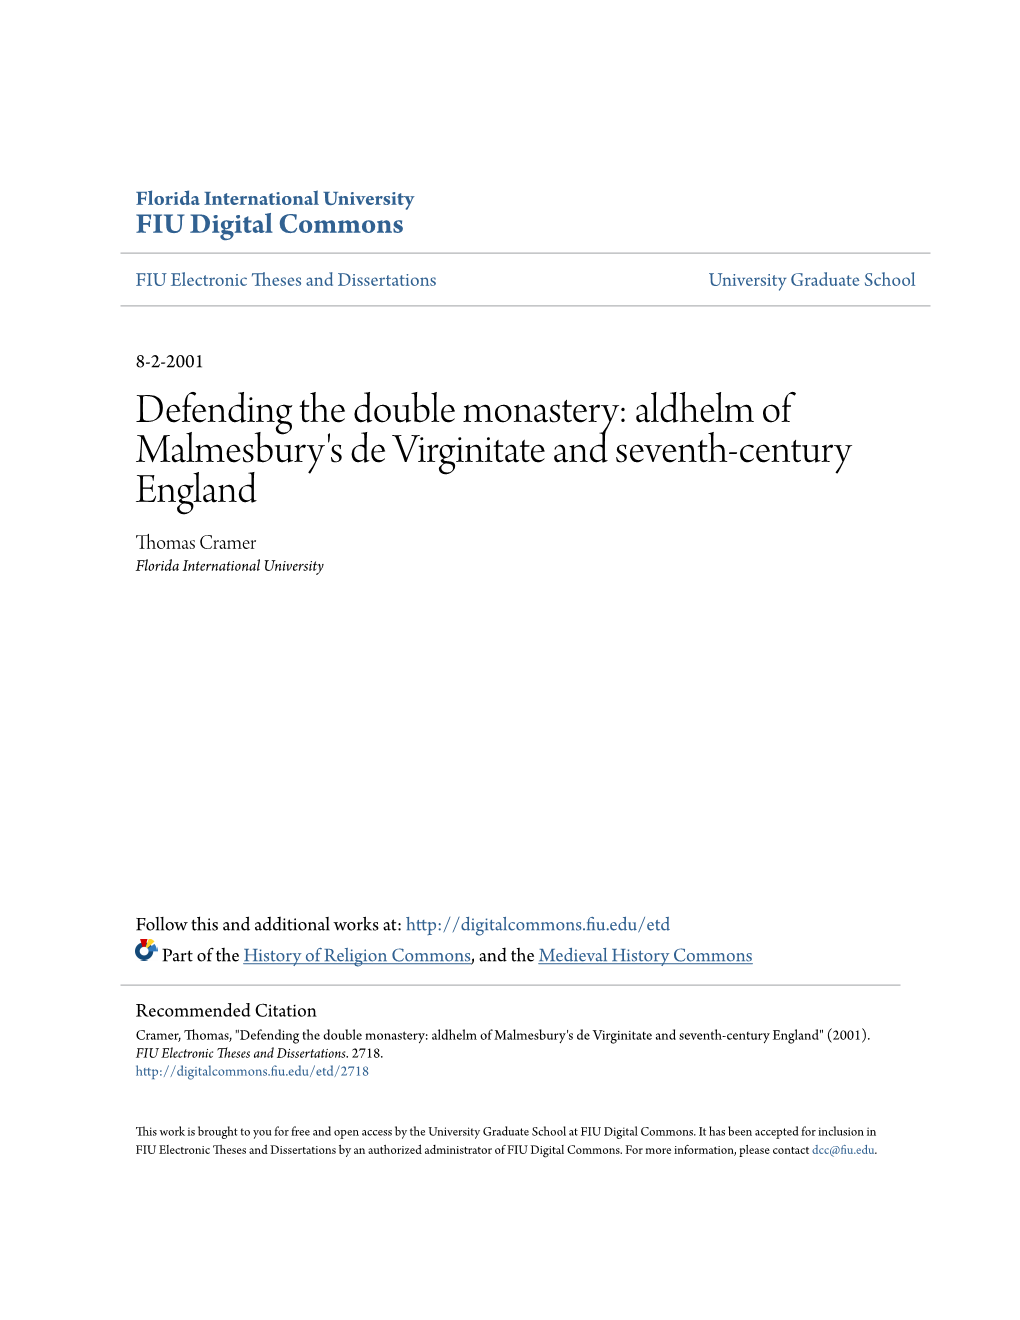 Defending the Double Monastery: Aldhelm of Malmesbury's De Virginitate and Seventh-Century England Thomas Cramer Florida International University